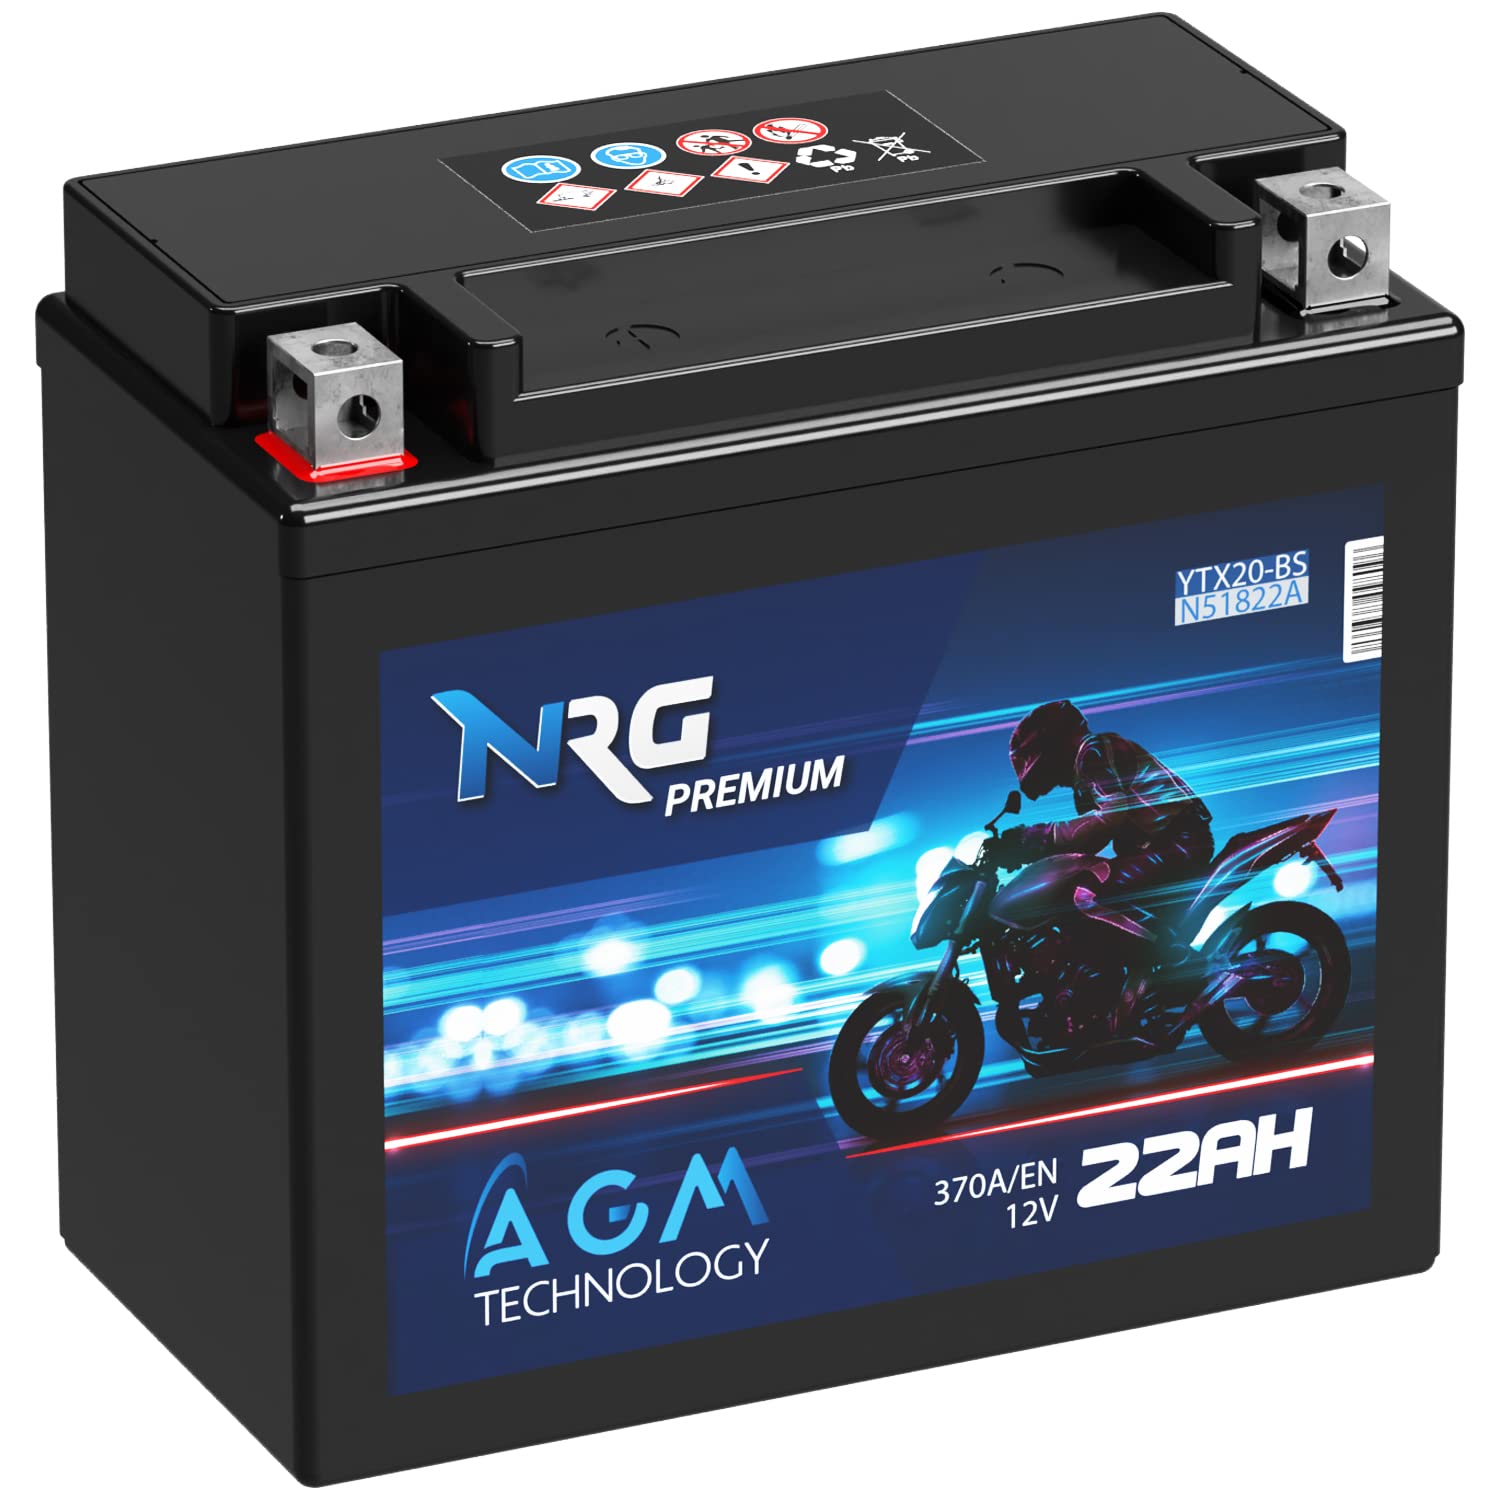 NRG Premium YTX20-BS AGM Motorradbatterie 22Ah 12V 370A/EN Batterie 51822 CTX20-BS GTX20-BS auslaufsicher wartungsfrei ersetzt 20Ah 21Ah von NRG PREMIUM